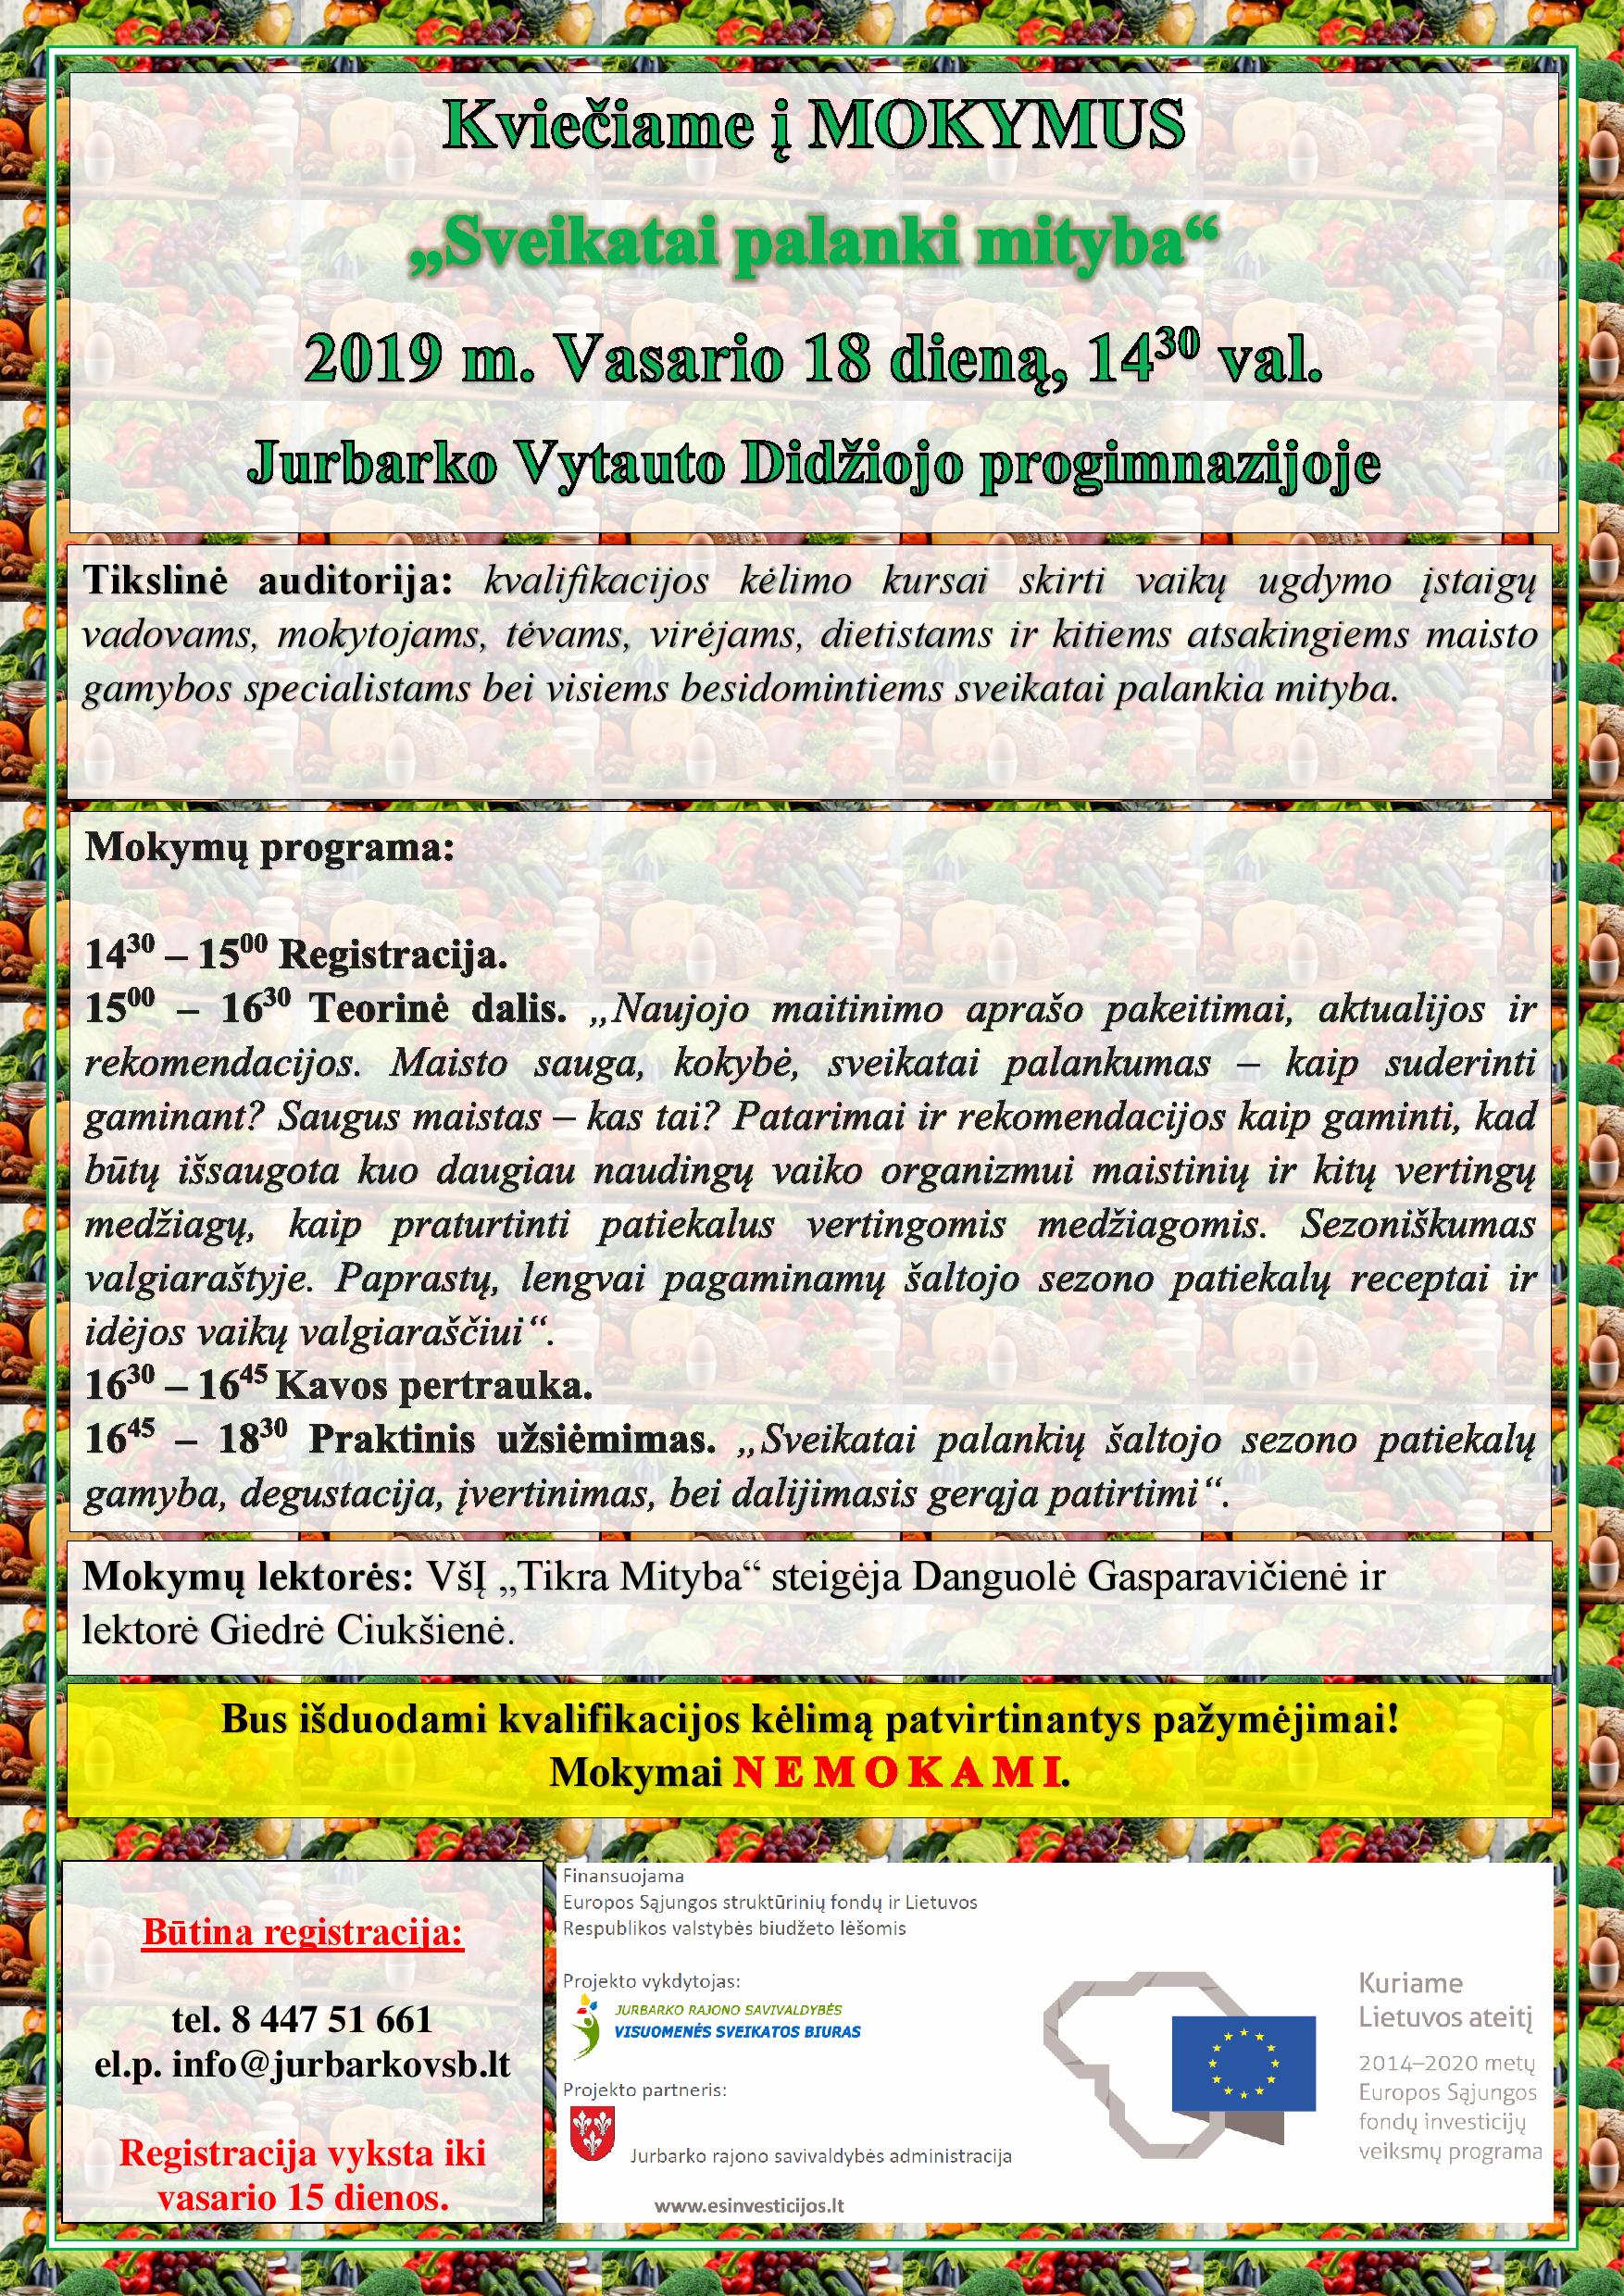 Mityba 02 18 Vytautas Didysis